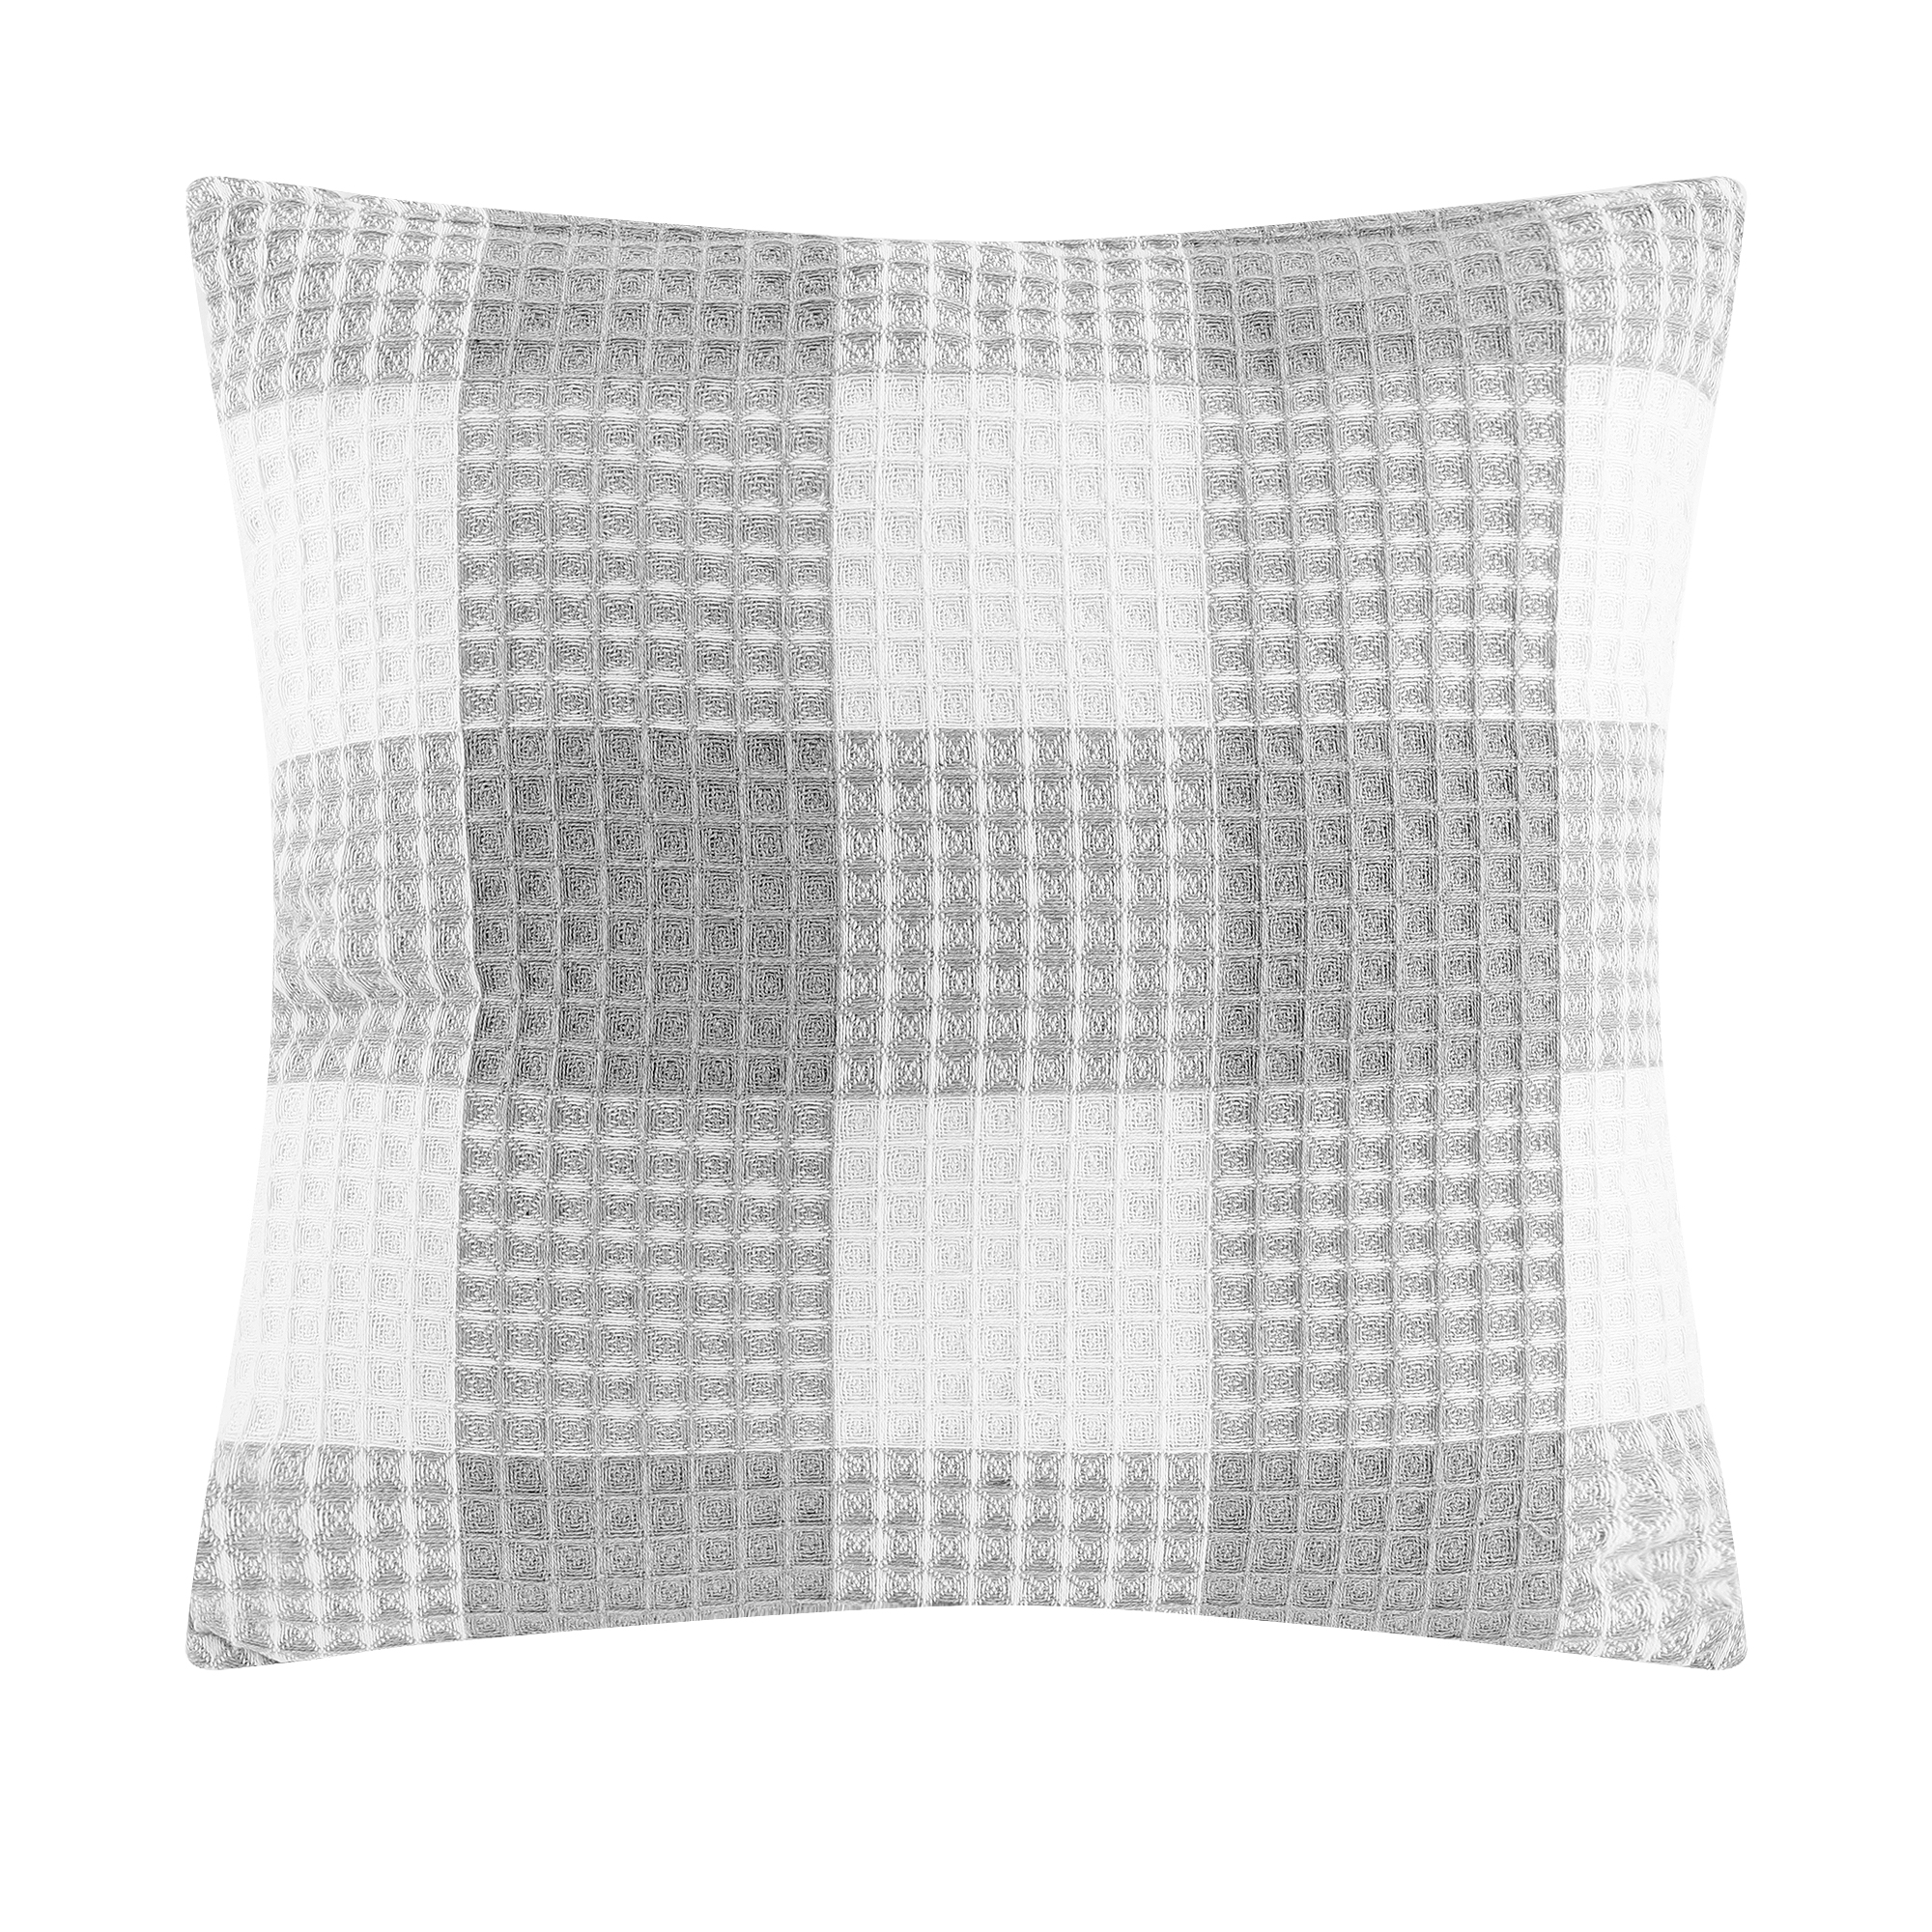 Подушка вафельная Homelines textiles check 45х45см grey